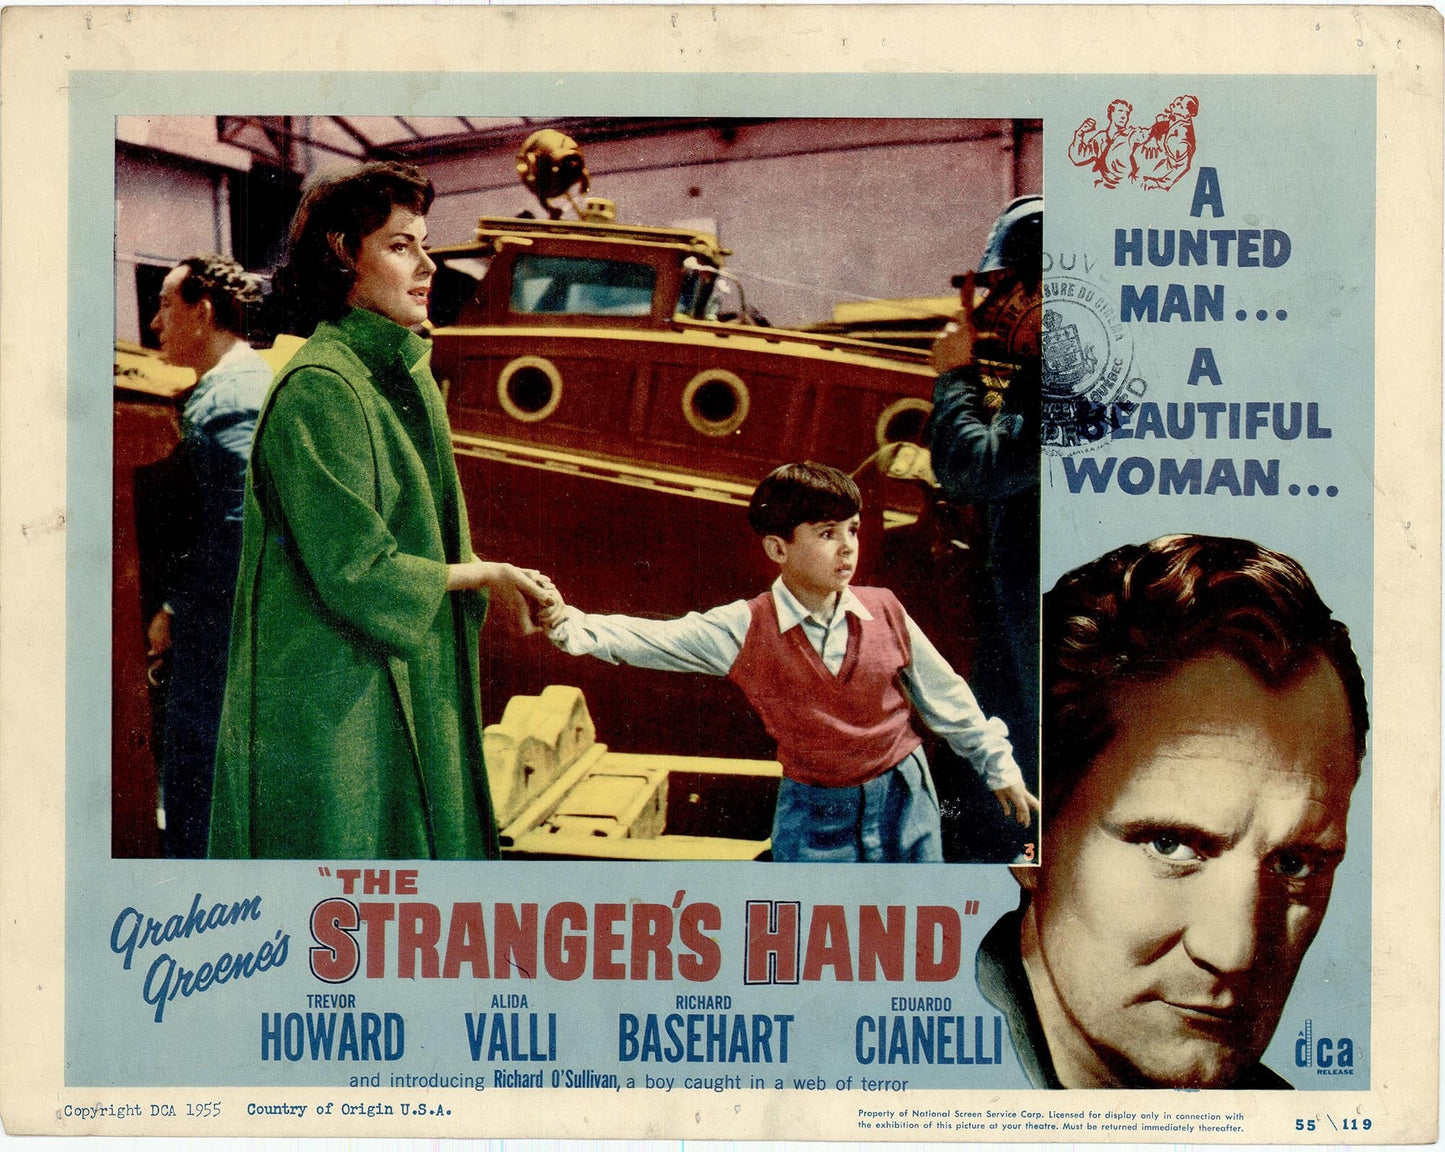 The Strangers Hand - Movie Lobby Card